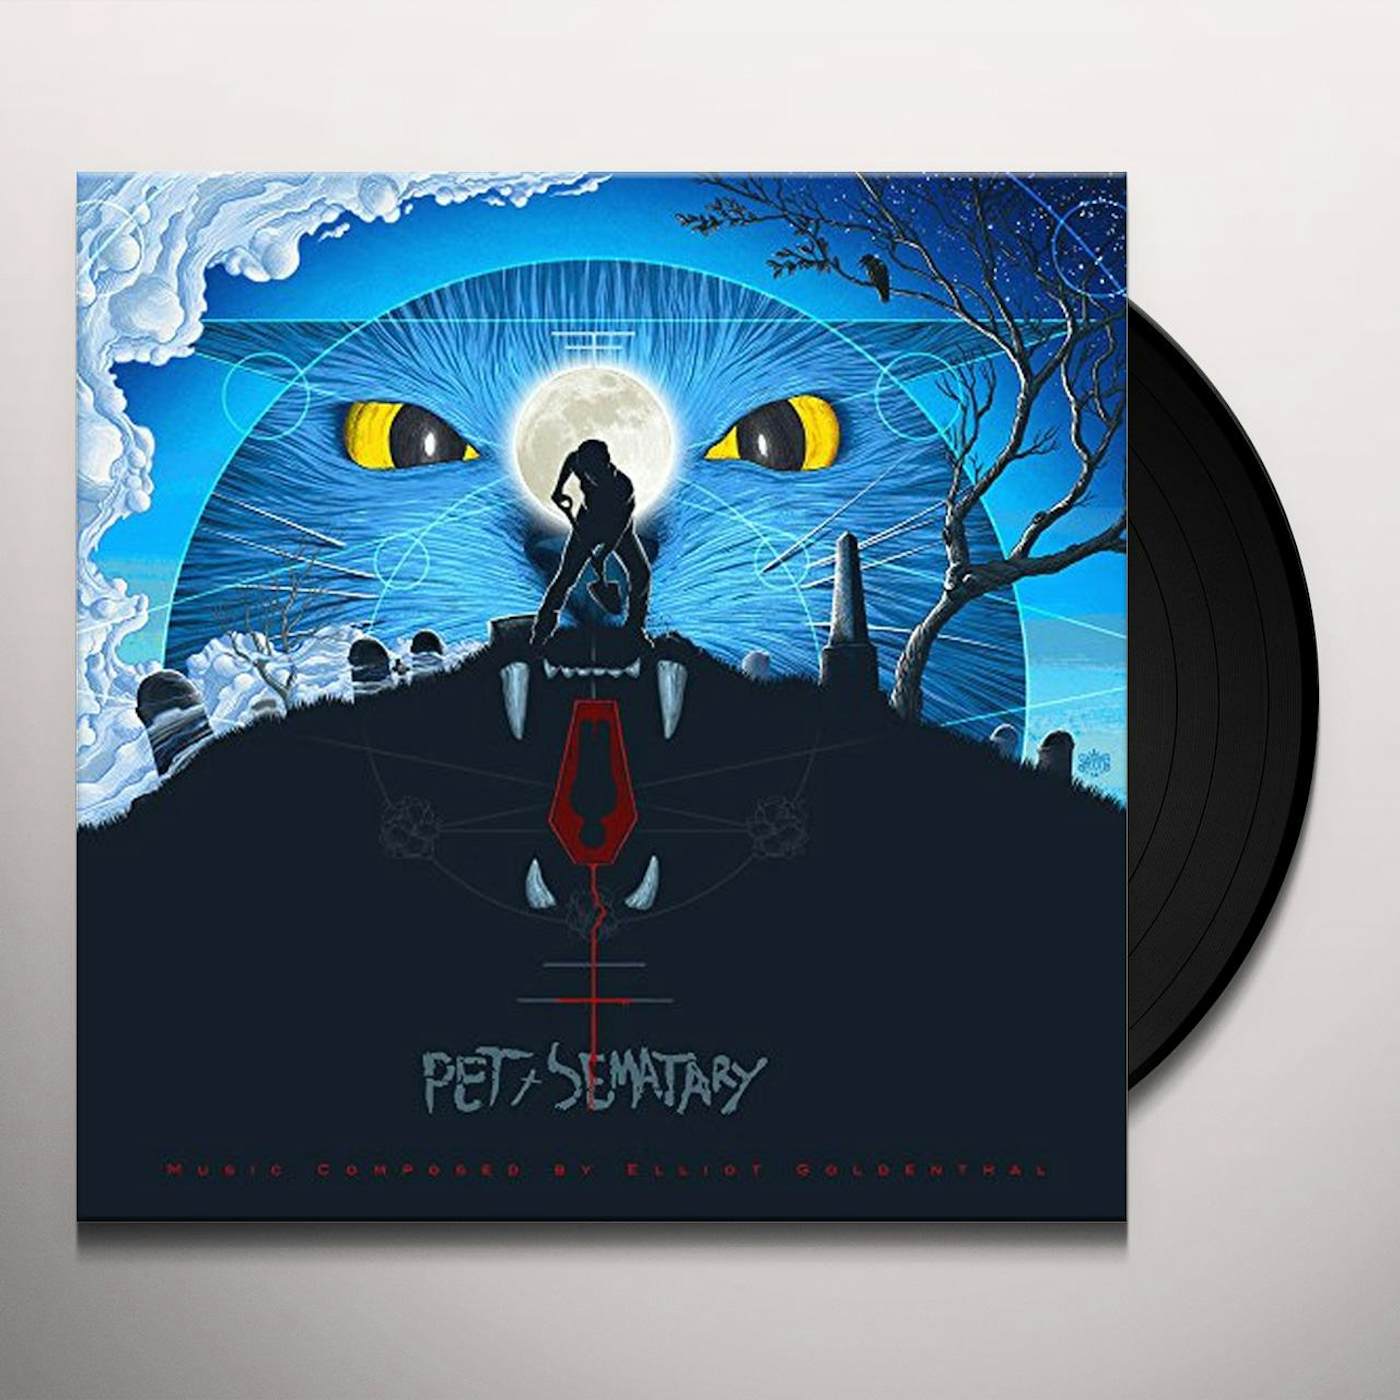 Elliot Goldenthal PET SEMATARY (SCORE) / Original Soundtrack Vinyl Record